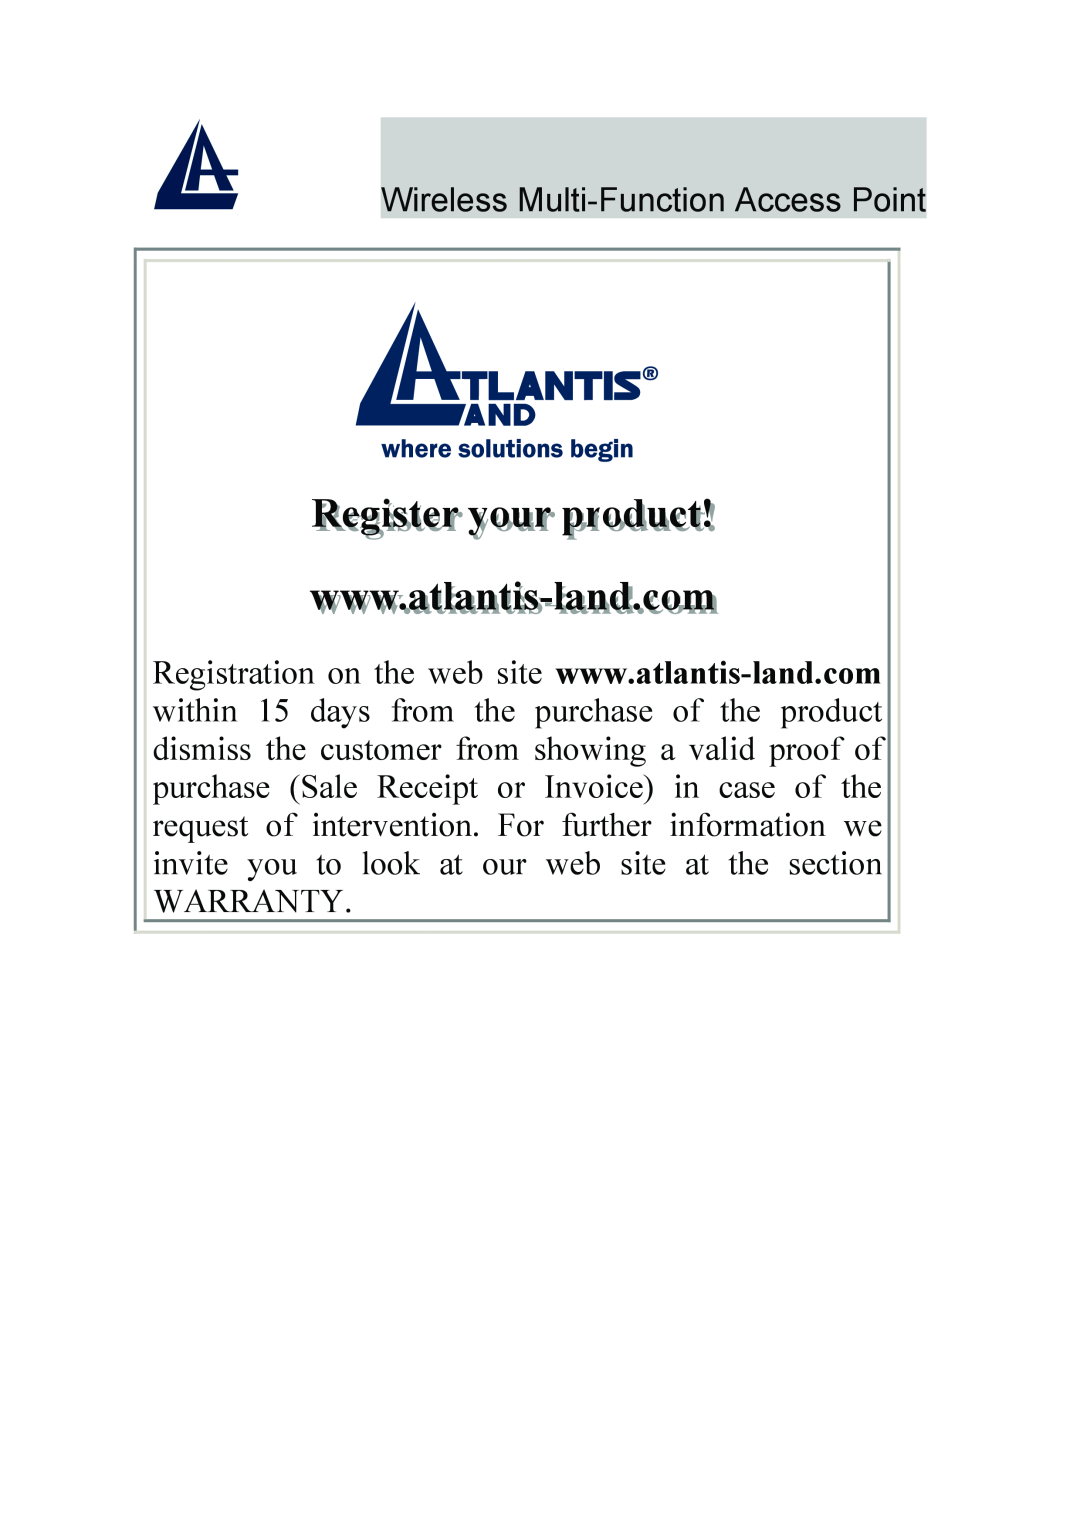 Atlantis Land A02-AP-W54_GE01 quick start Regiisstter your productt, Wireless Multi-Function Access Point, Warranty 